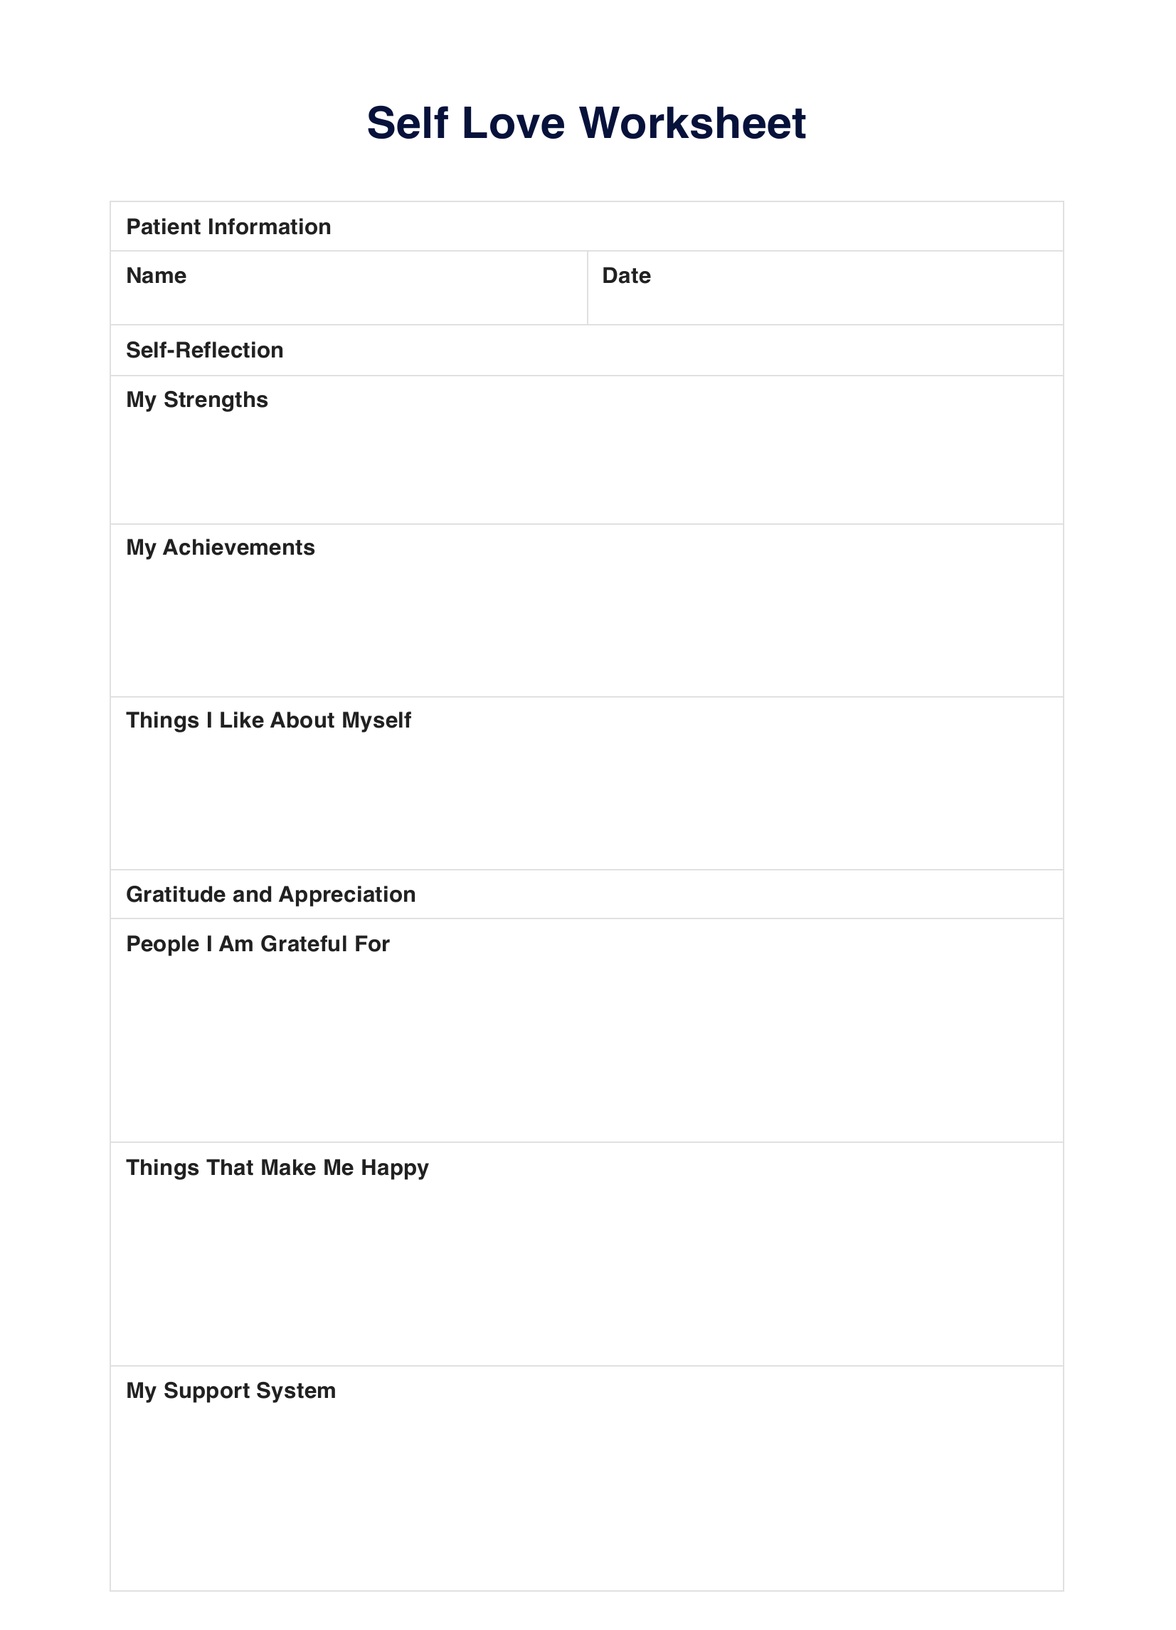 Self Love Worksheets PDF Example